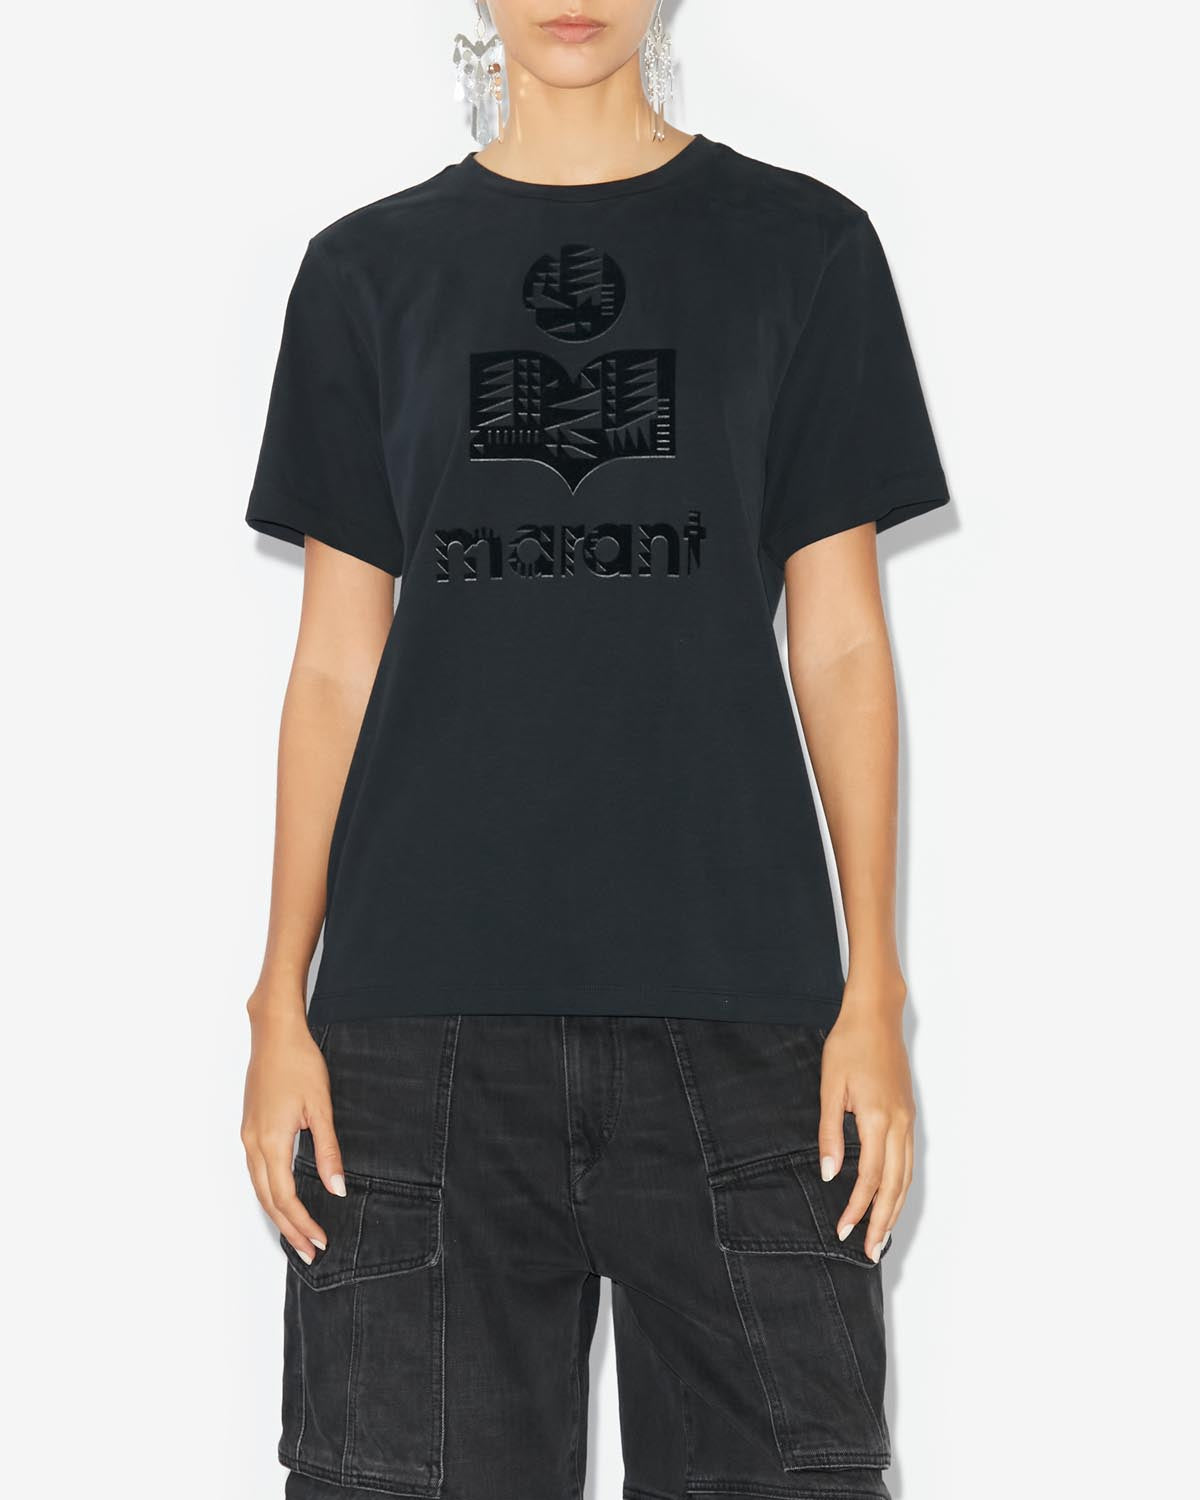 Zewel ロゴ tシャツ Woman 黒 5